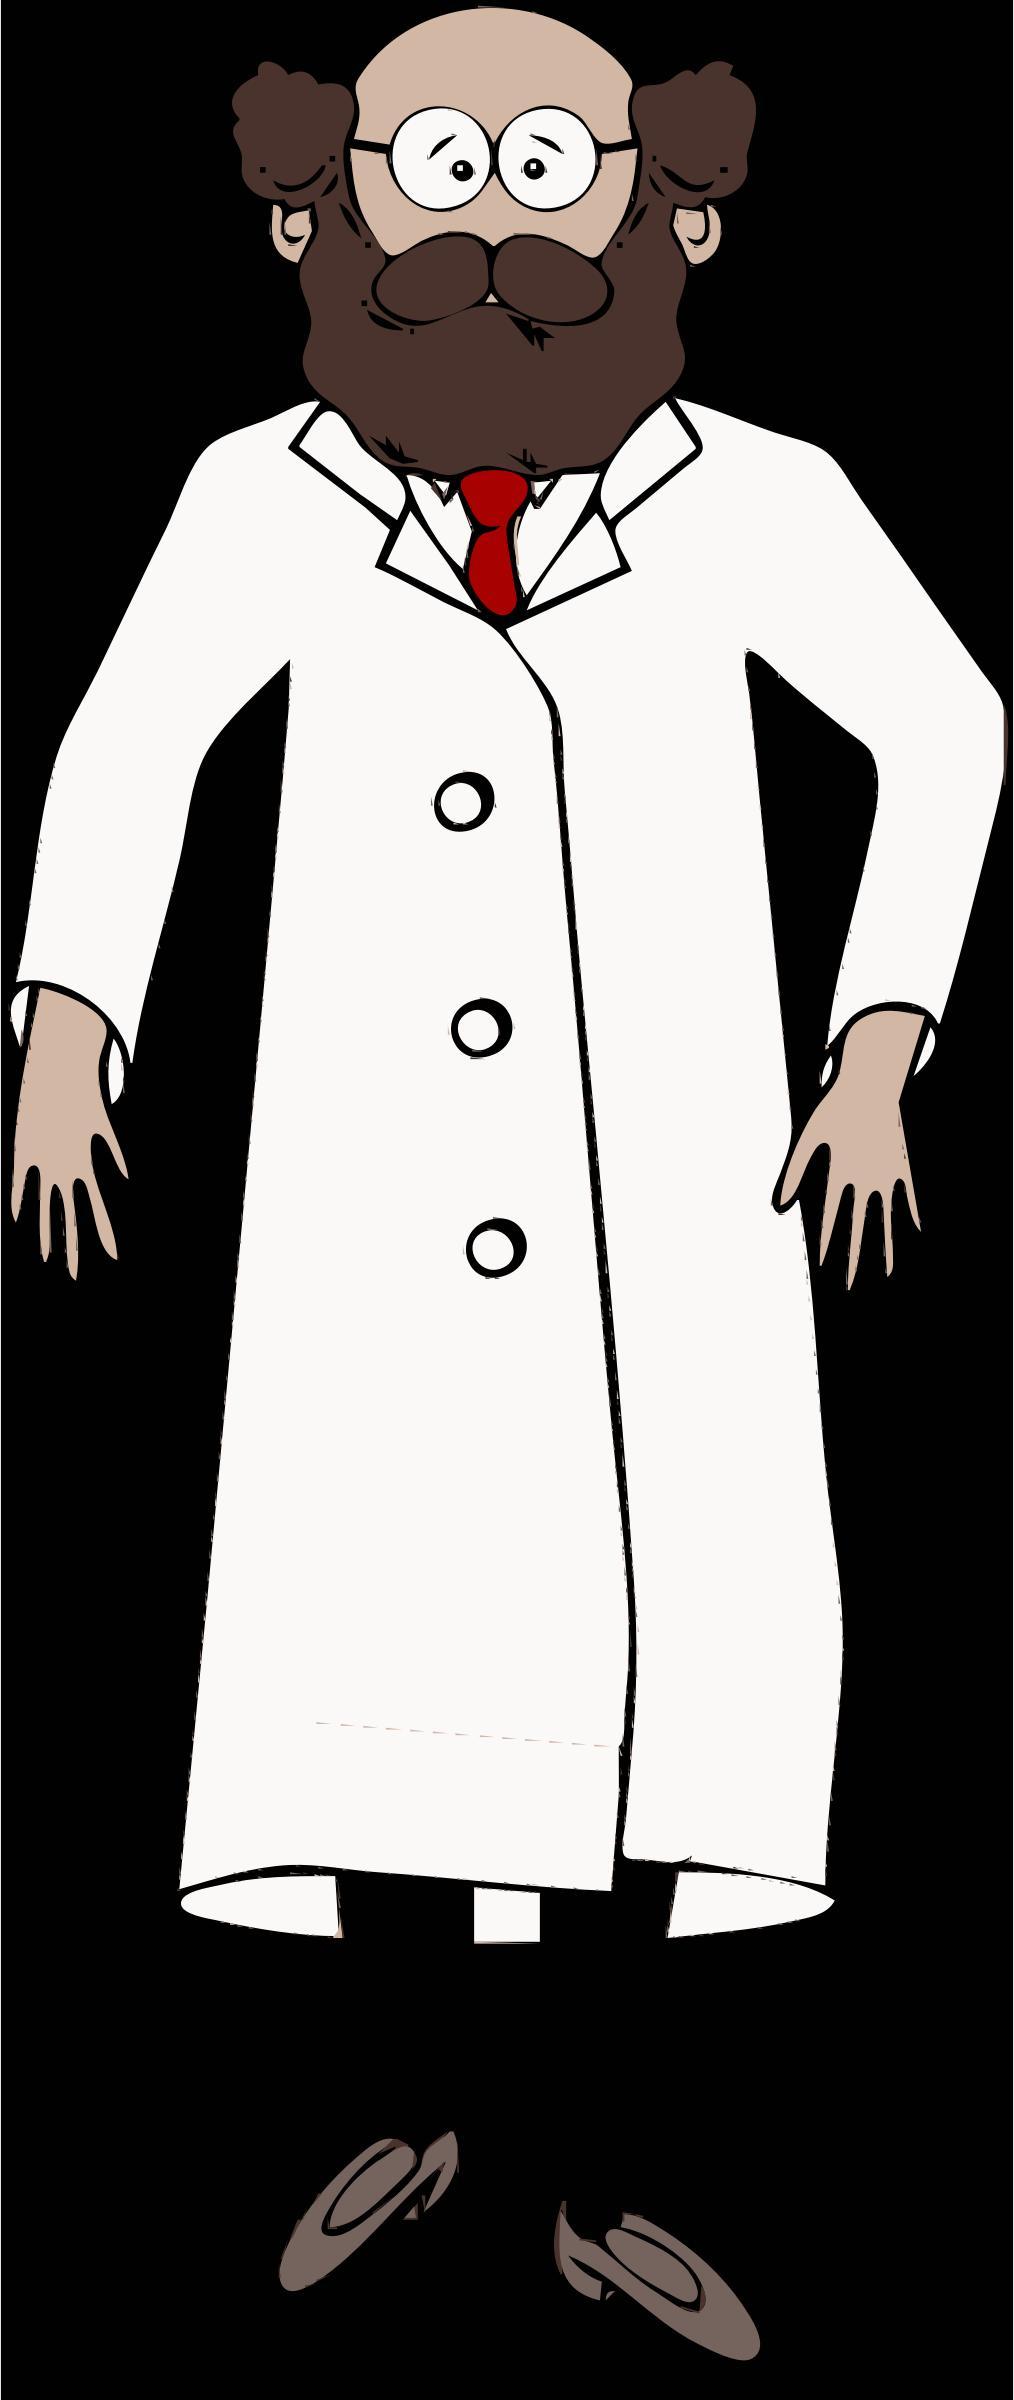 lab coat worn by scientist png transparent